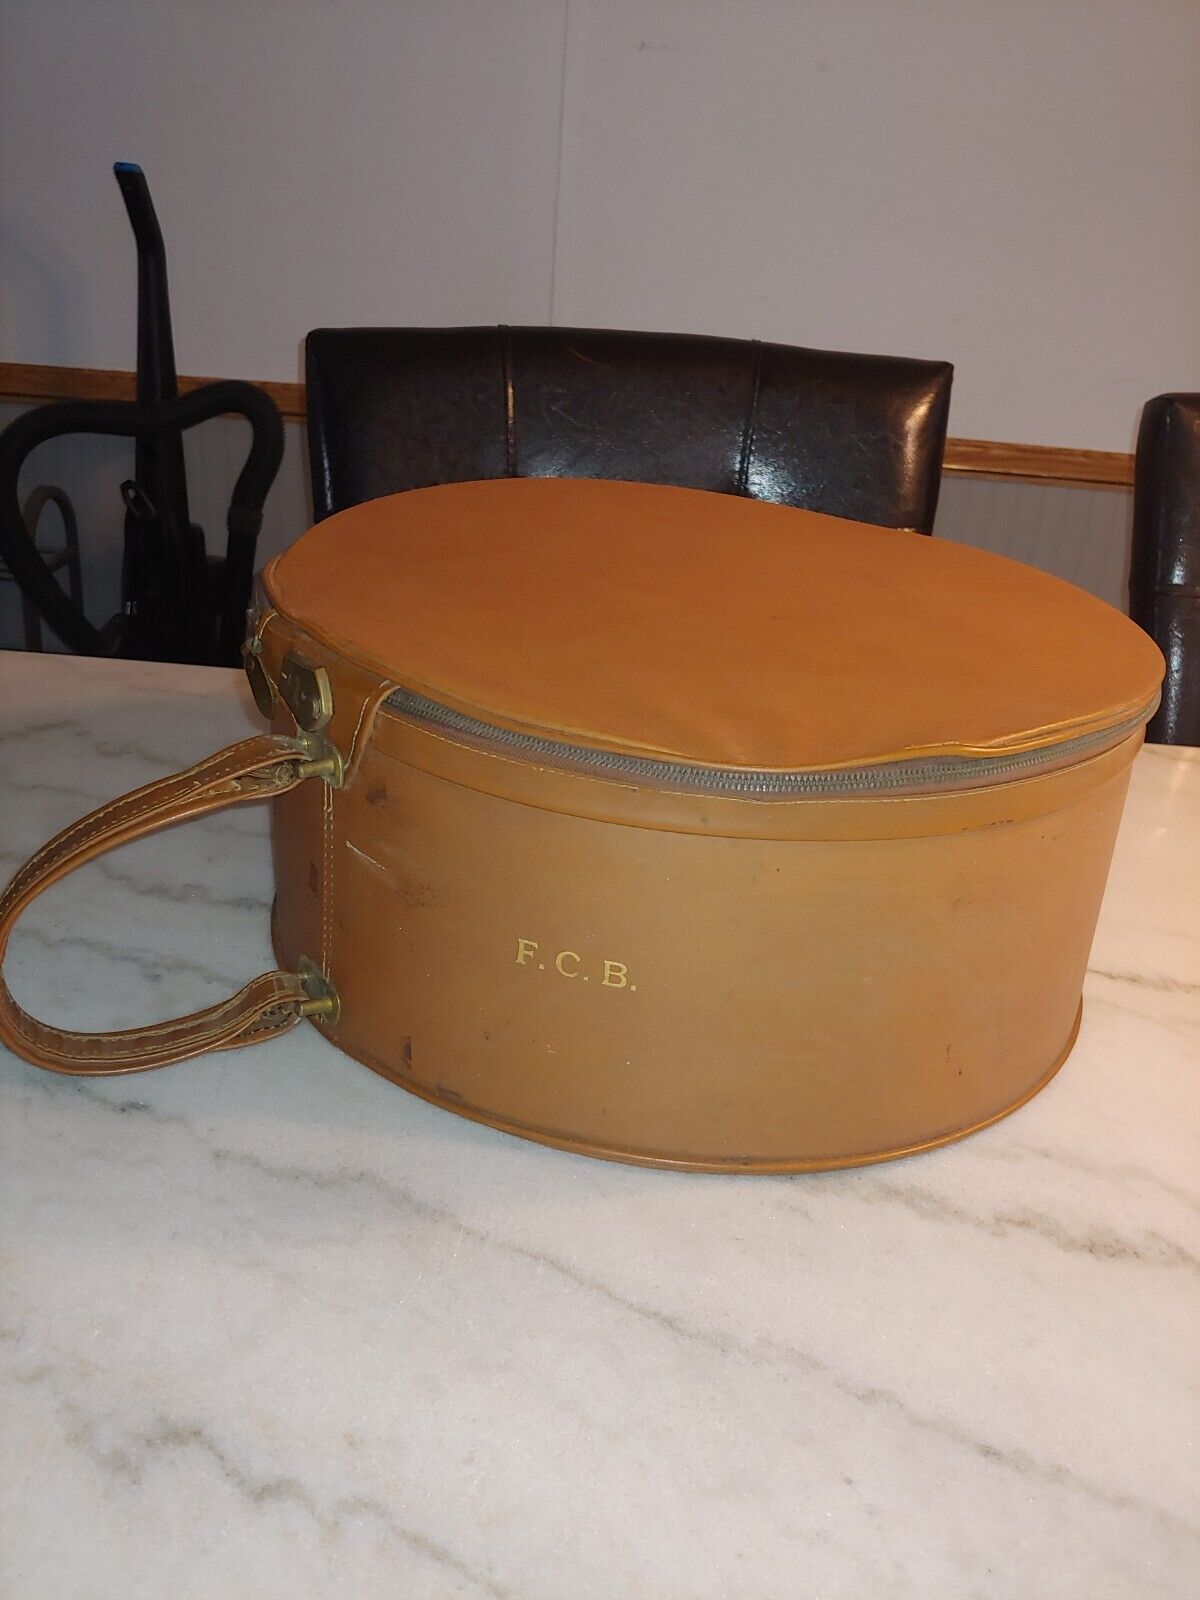 Vintage"lark" Brown Hat Box Round Zippered Travel Case Luggage F.c.b